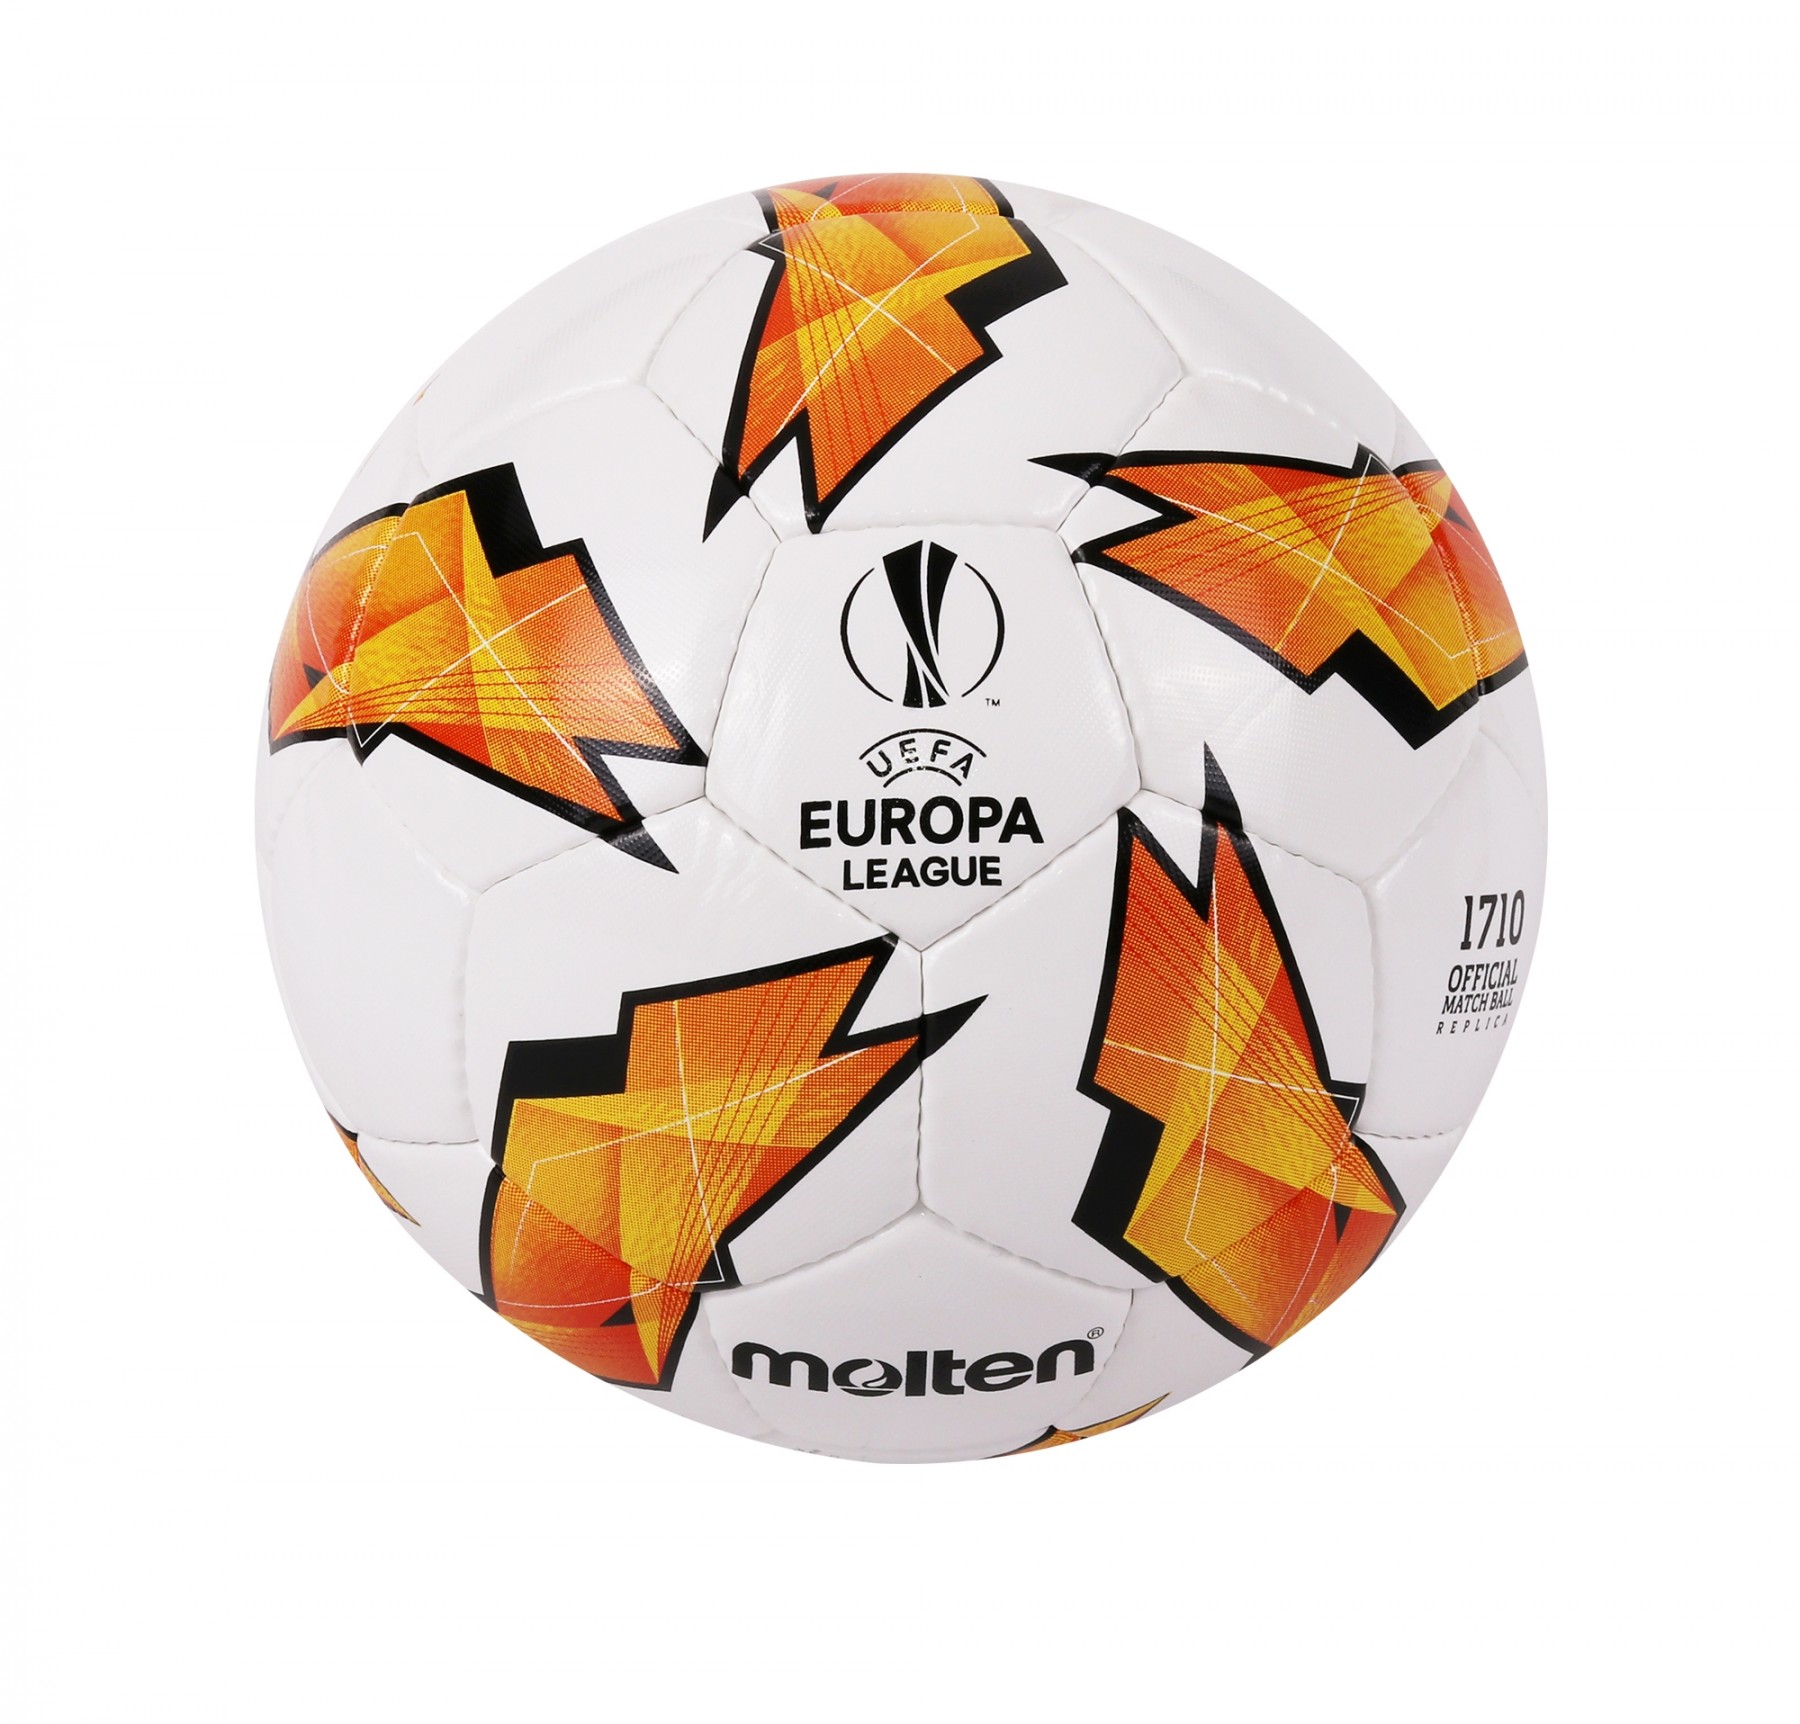 2018/19 Molten Official Match Ball of the UEFA Europa League 